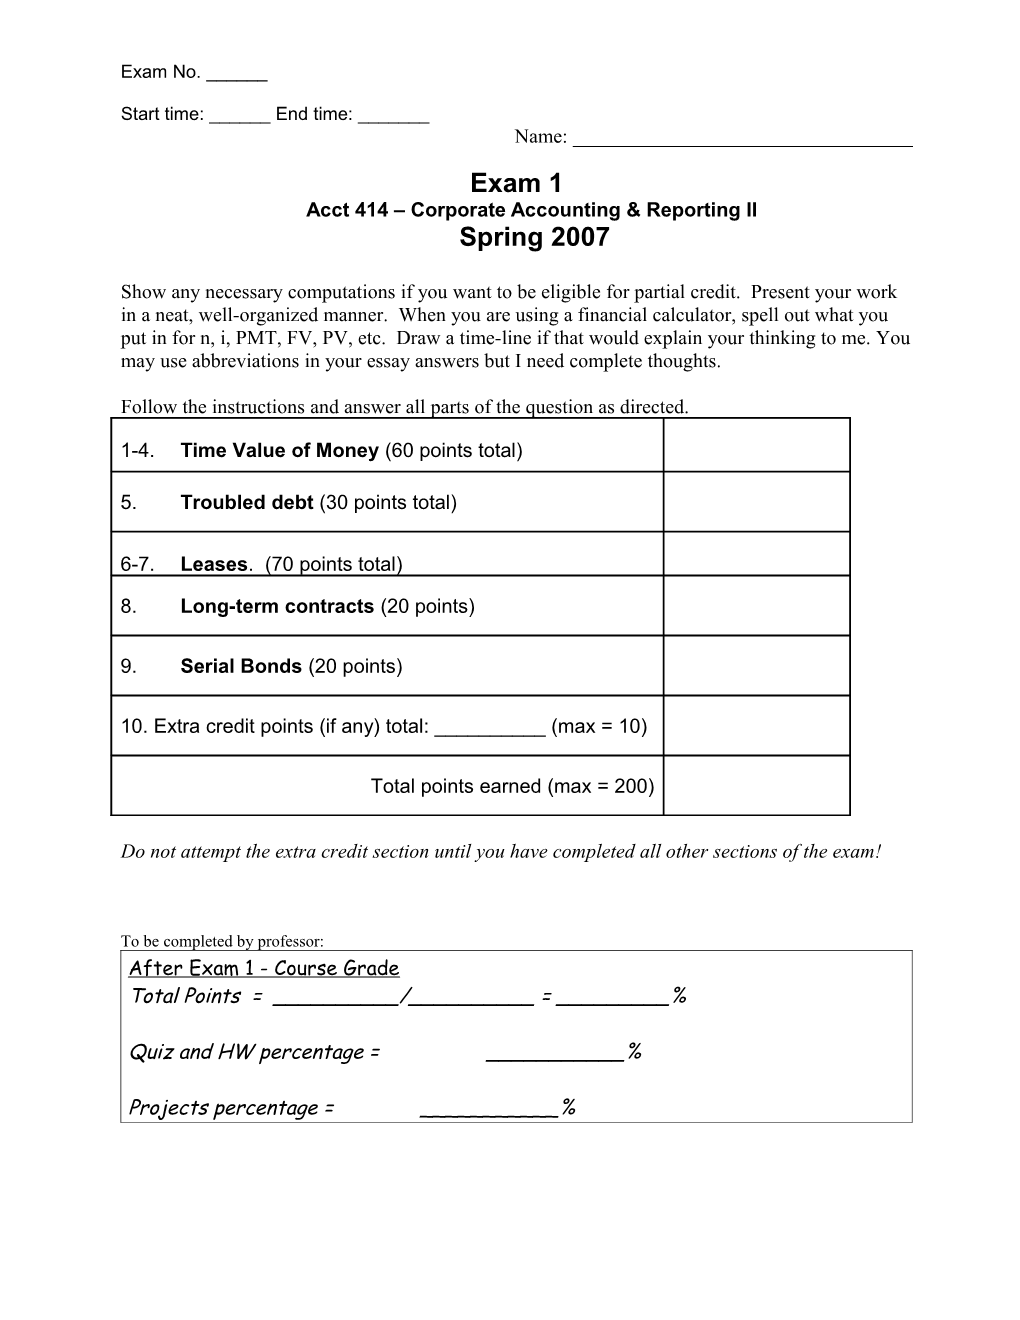 Exam 1 - Acct 414 - Spring 2007